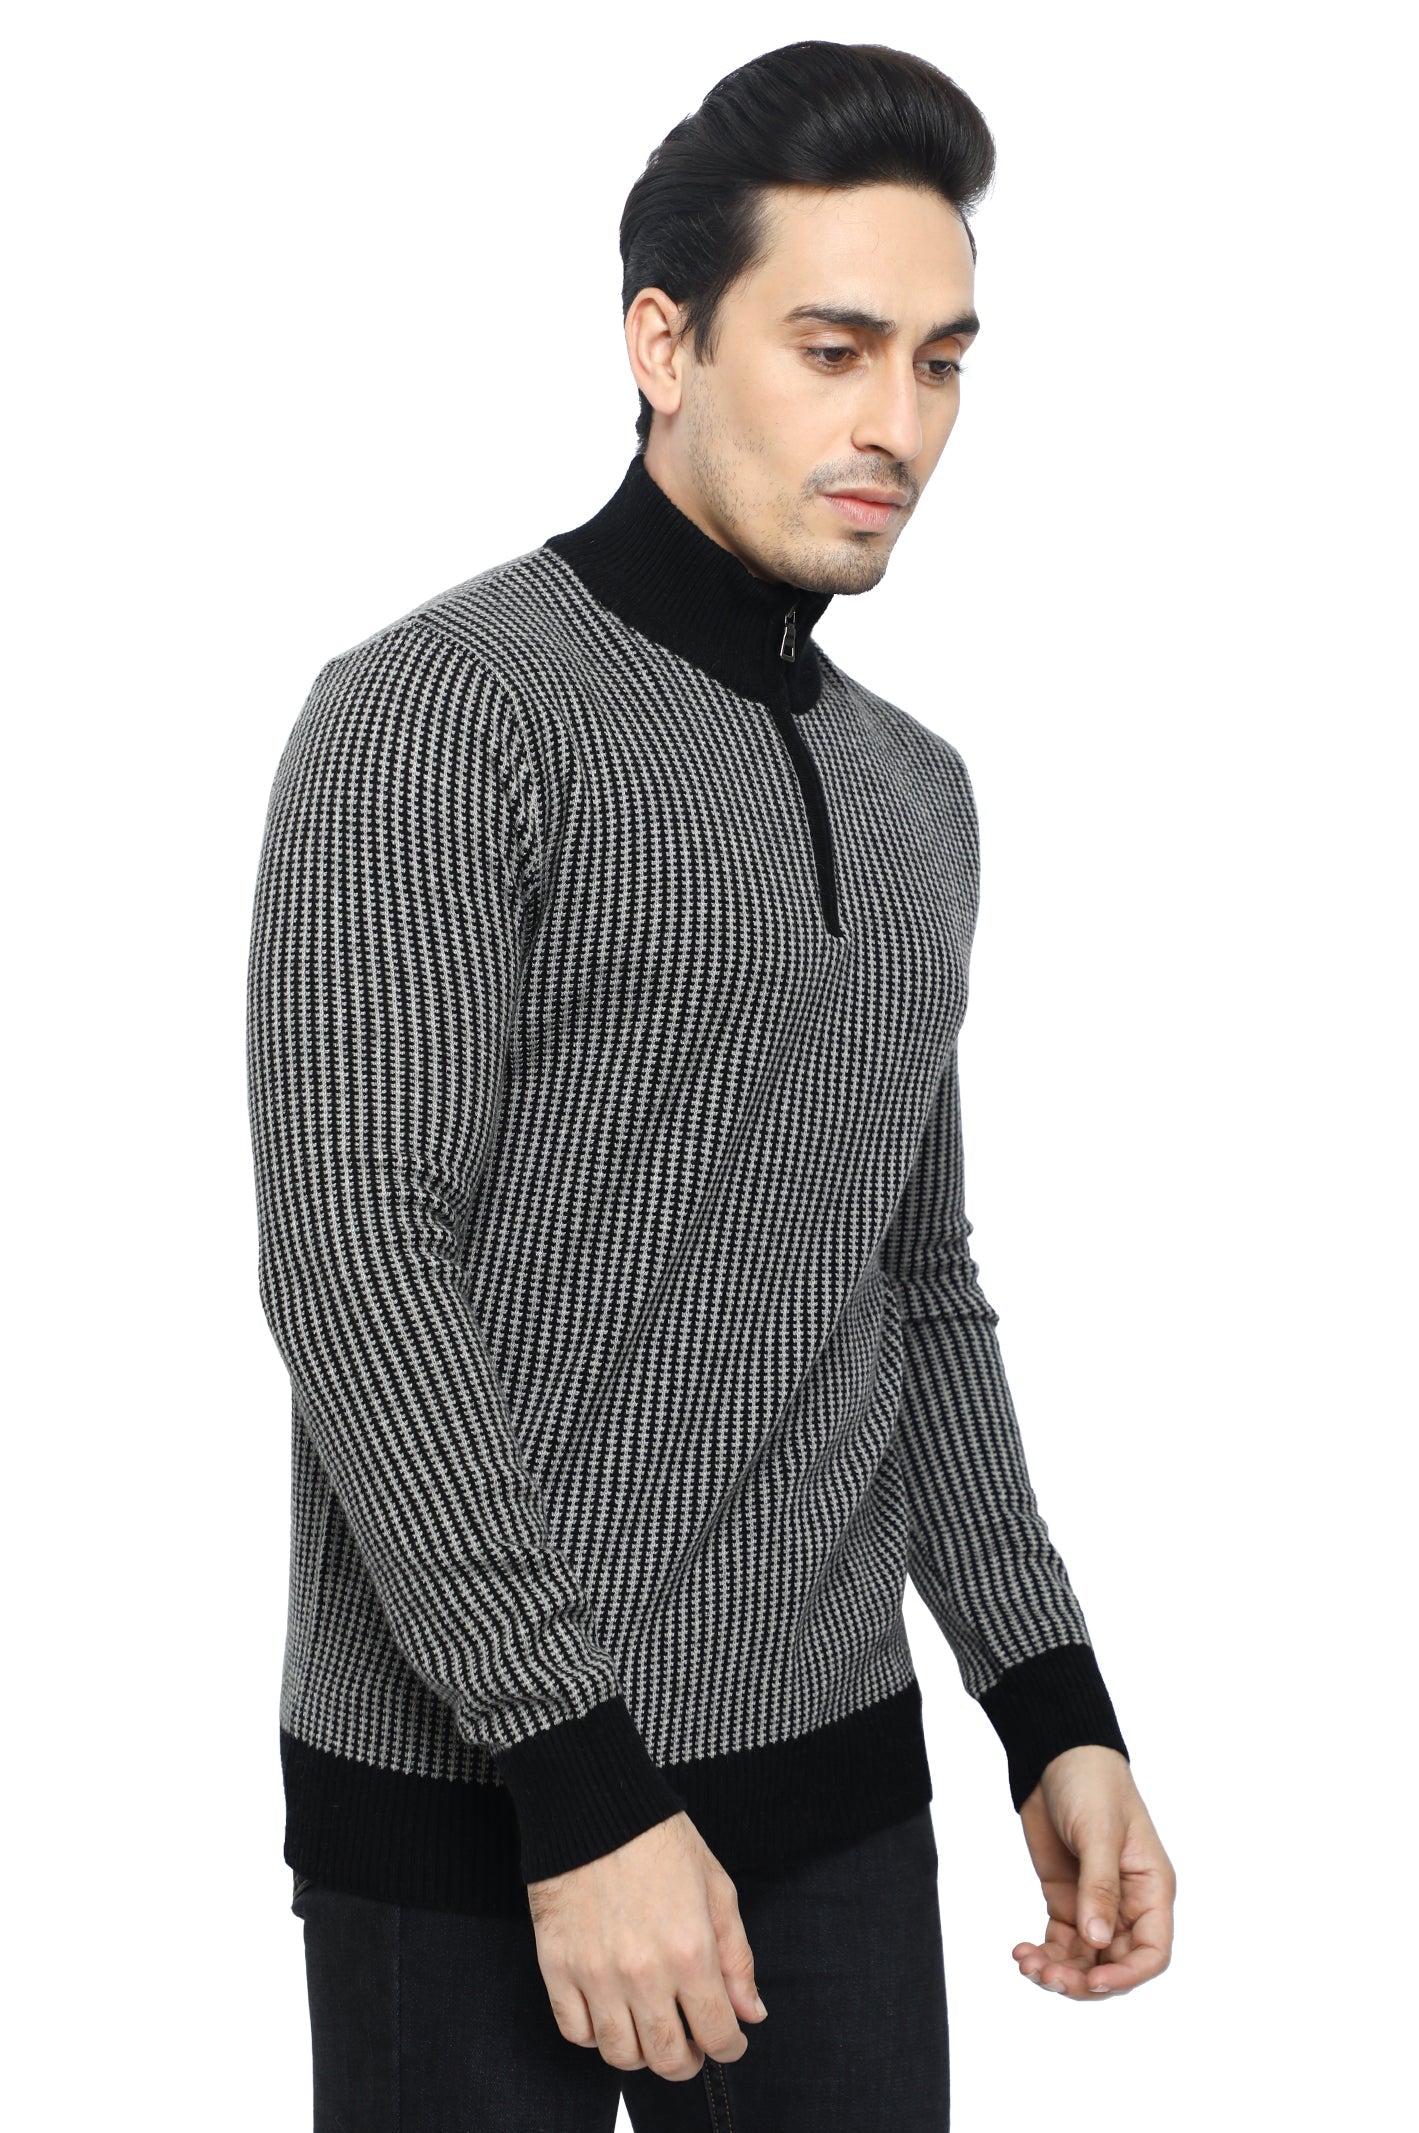 Gents Sweater In Black SKU: SA577-BLACK - Diners